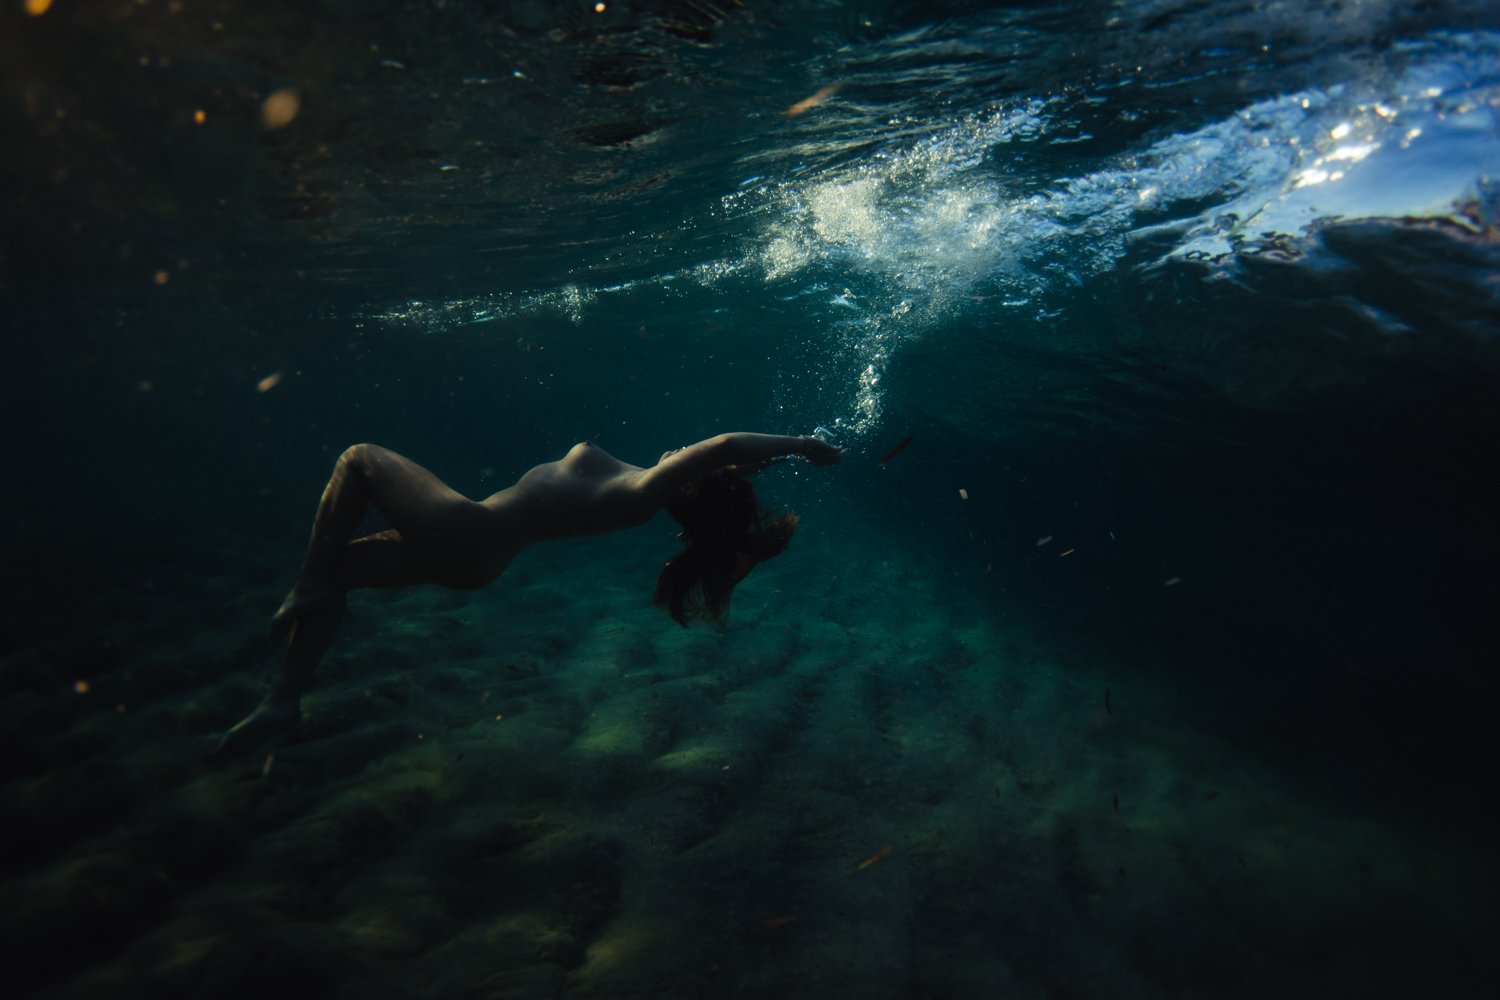 underwater corse corsica sea mediterranean island france french photographer photographe ajaccio Krista Espino Capo di feno wave nude nue femme woman fine art photography-33.jpg